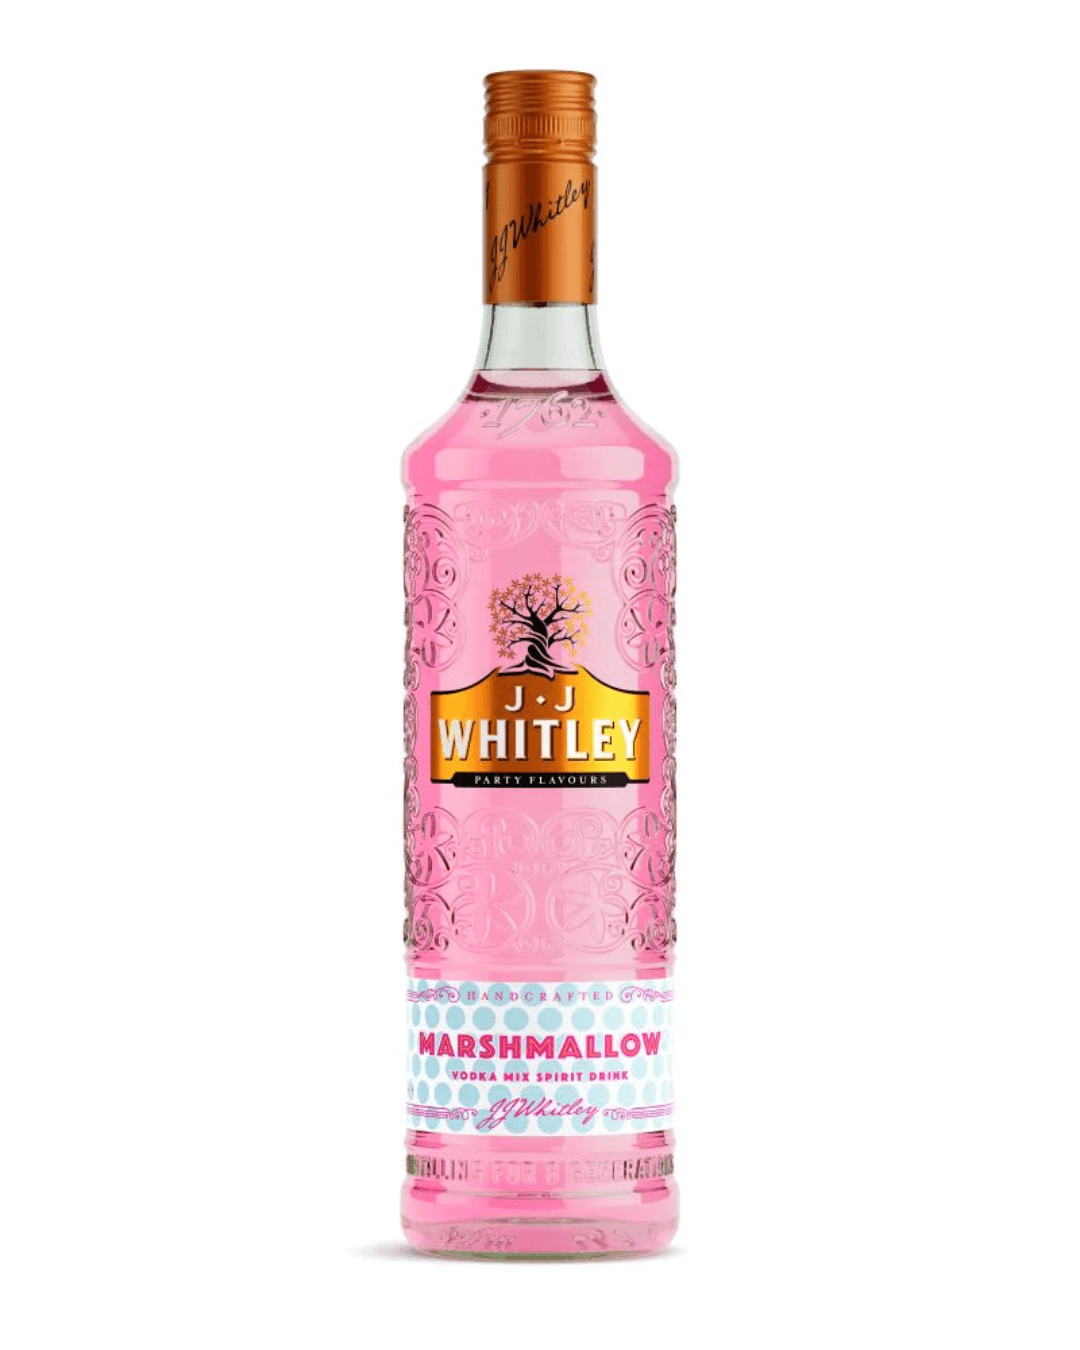 J.J. Whitley Marshmallow Vodka Mix Spirit Drink, 70 cl Vodka